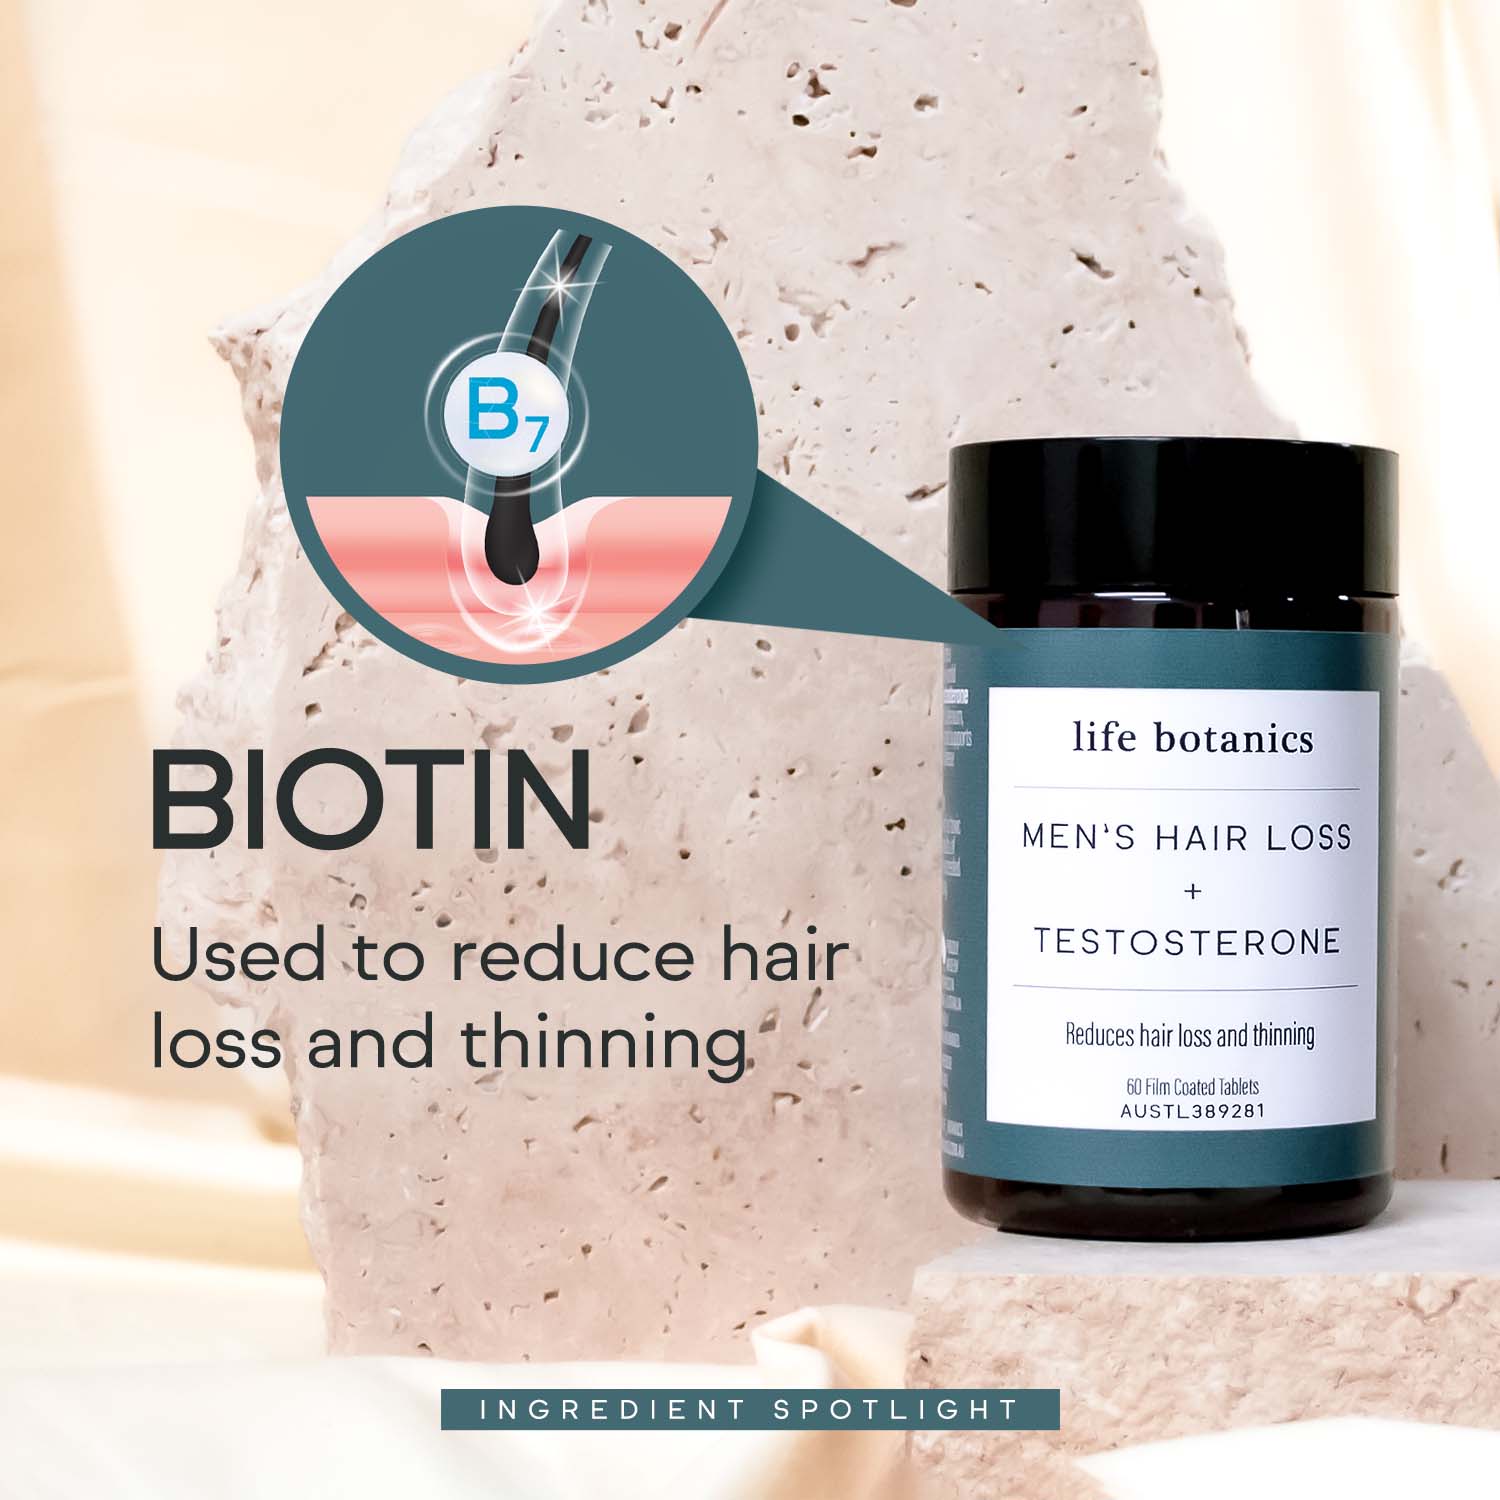 life botanics Men's Hair Loss + Testosterone Biotin